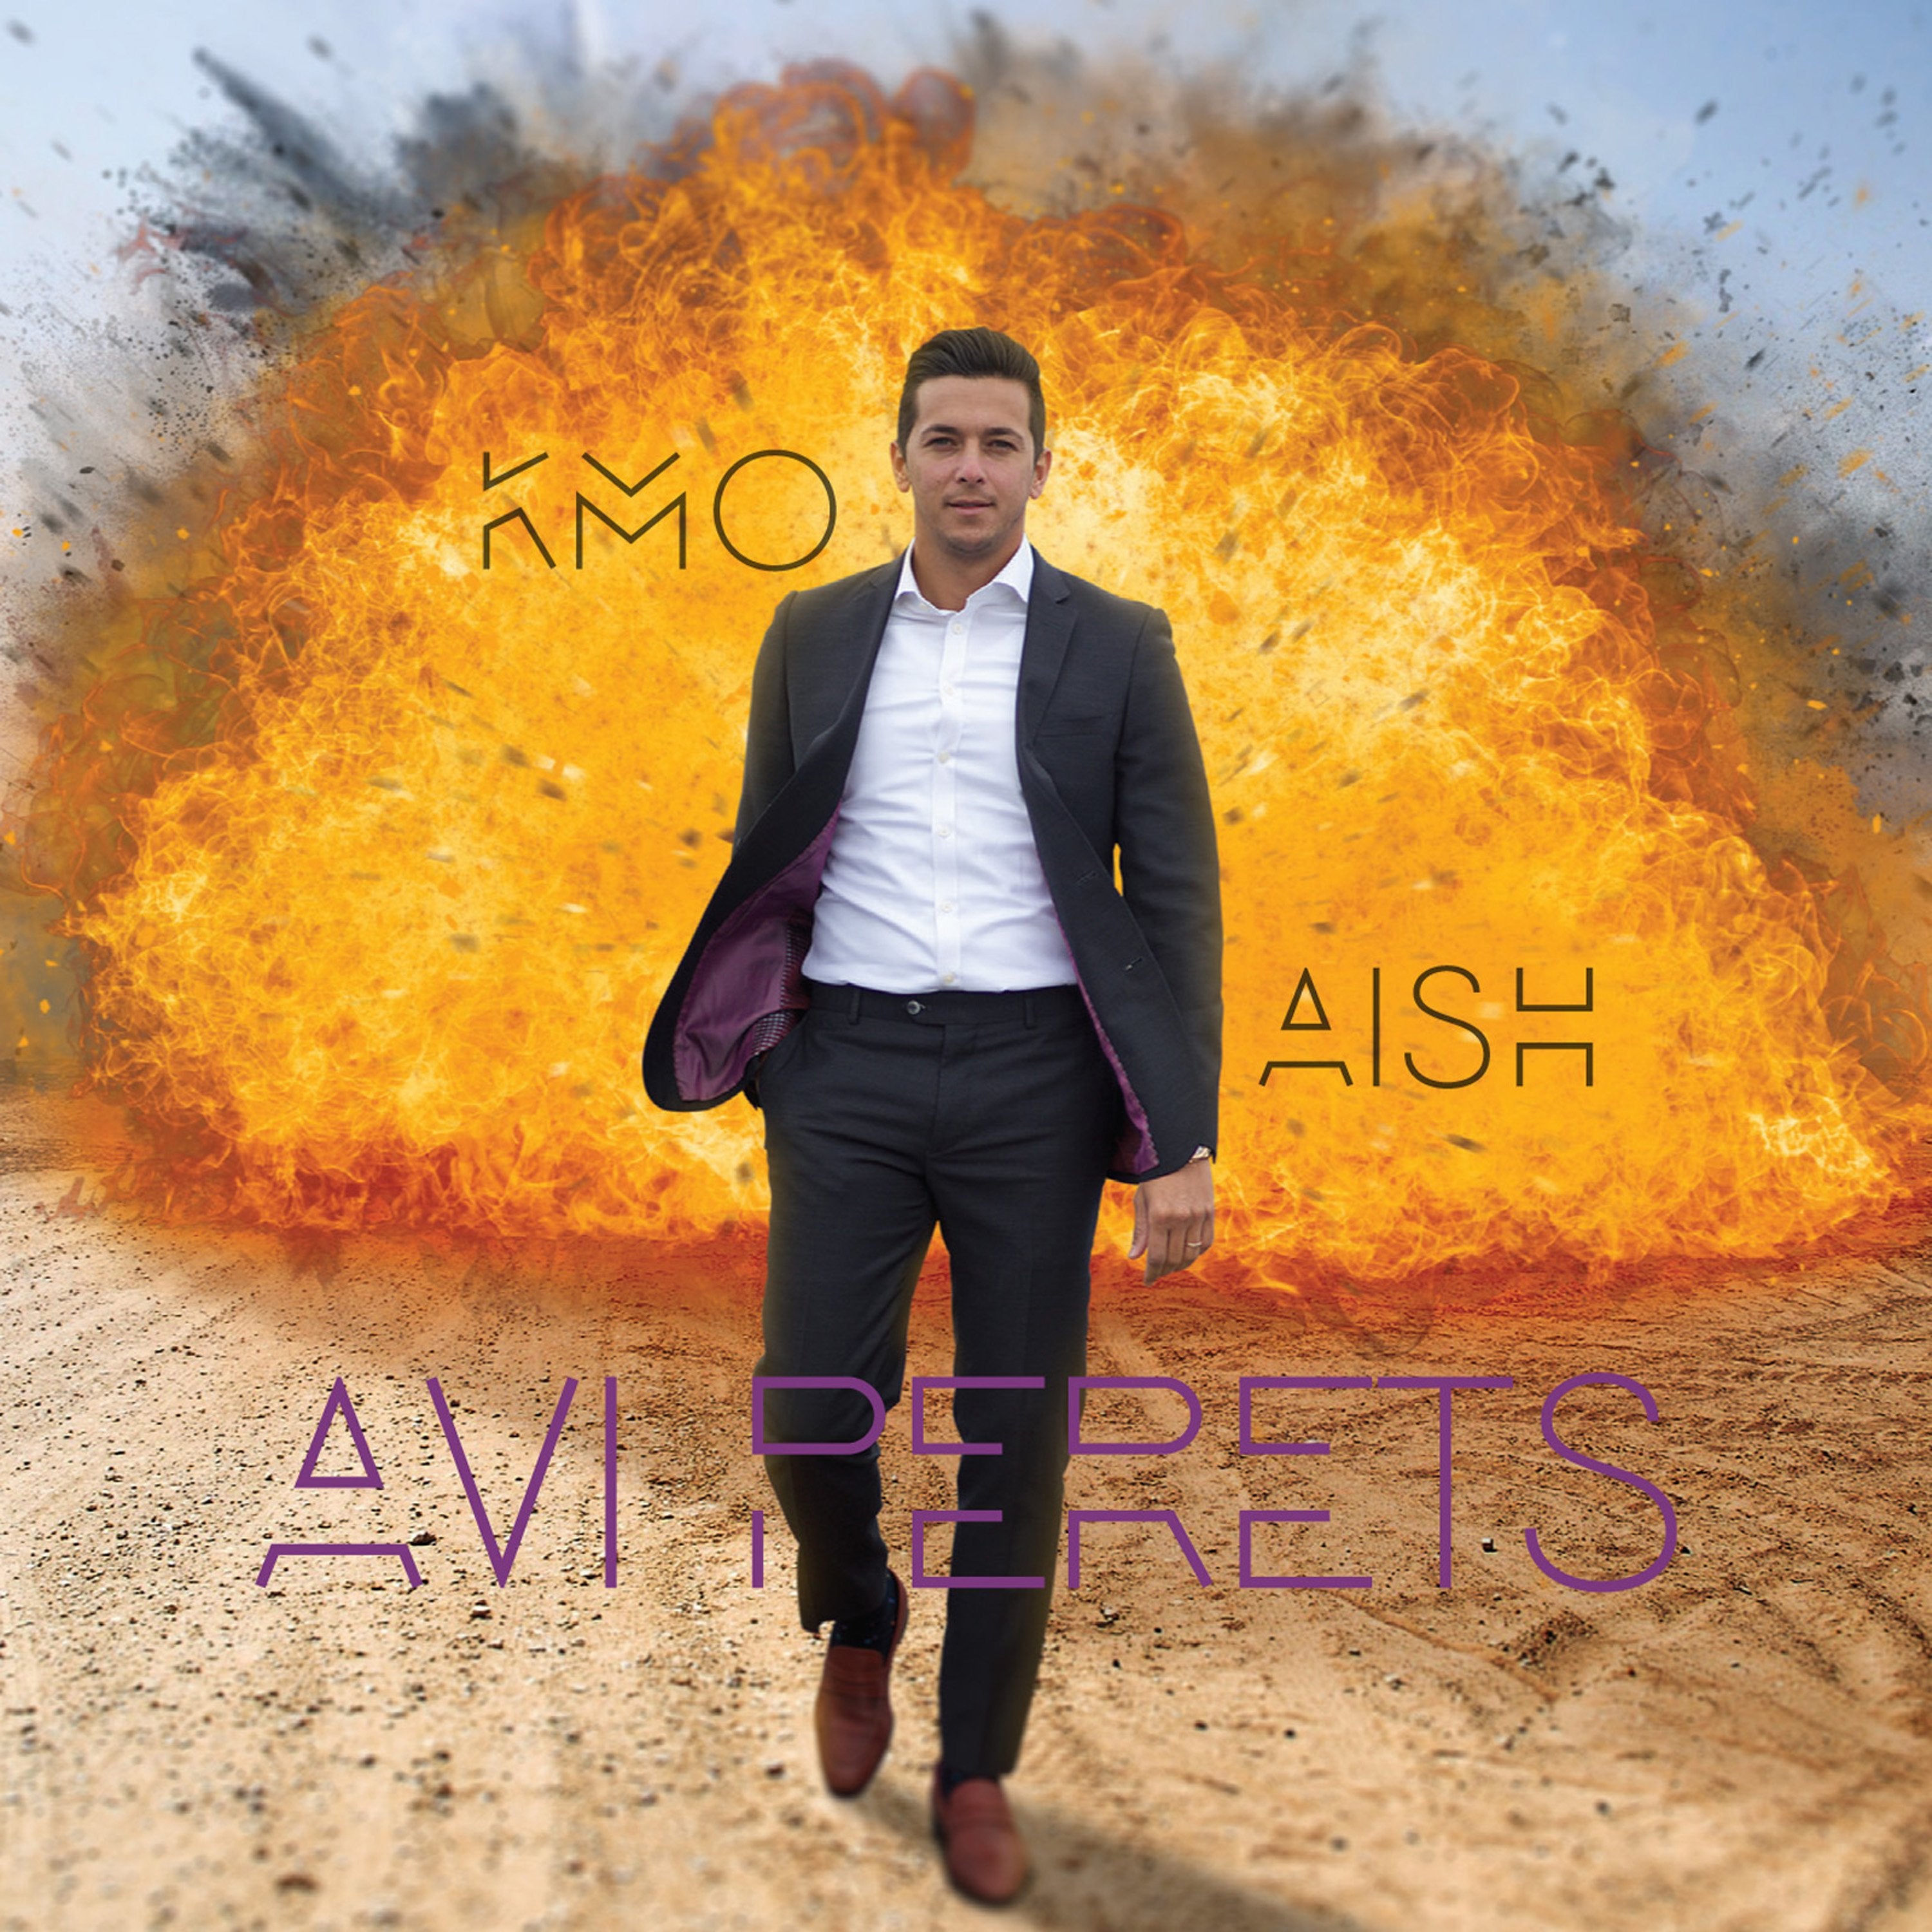 Avi Perets - Kmo Aish (Avi Newmark Production)